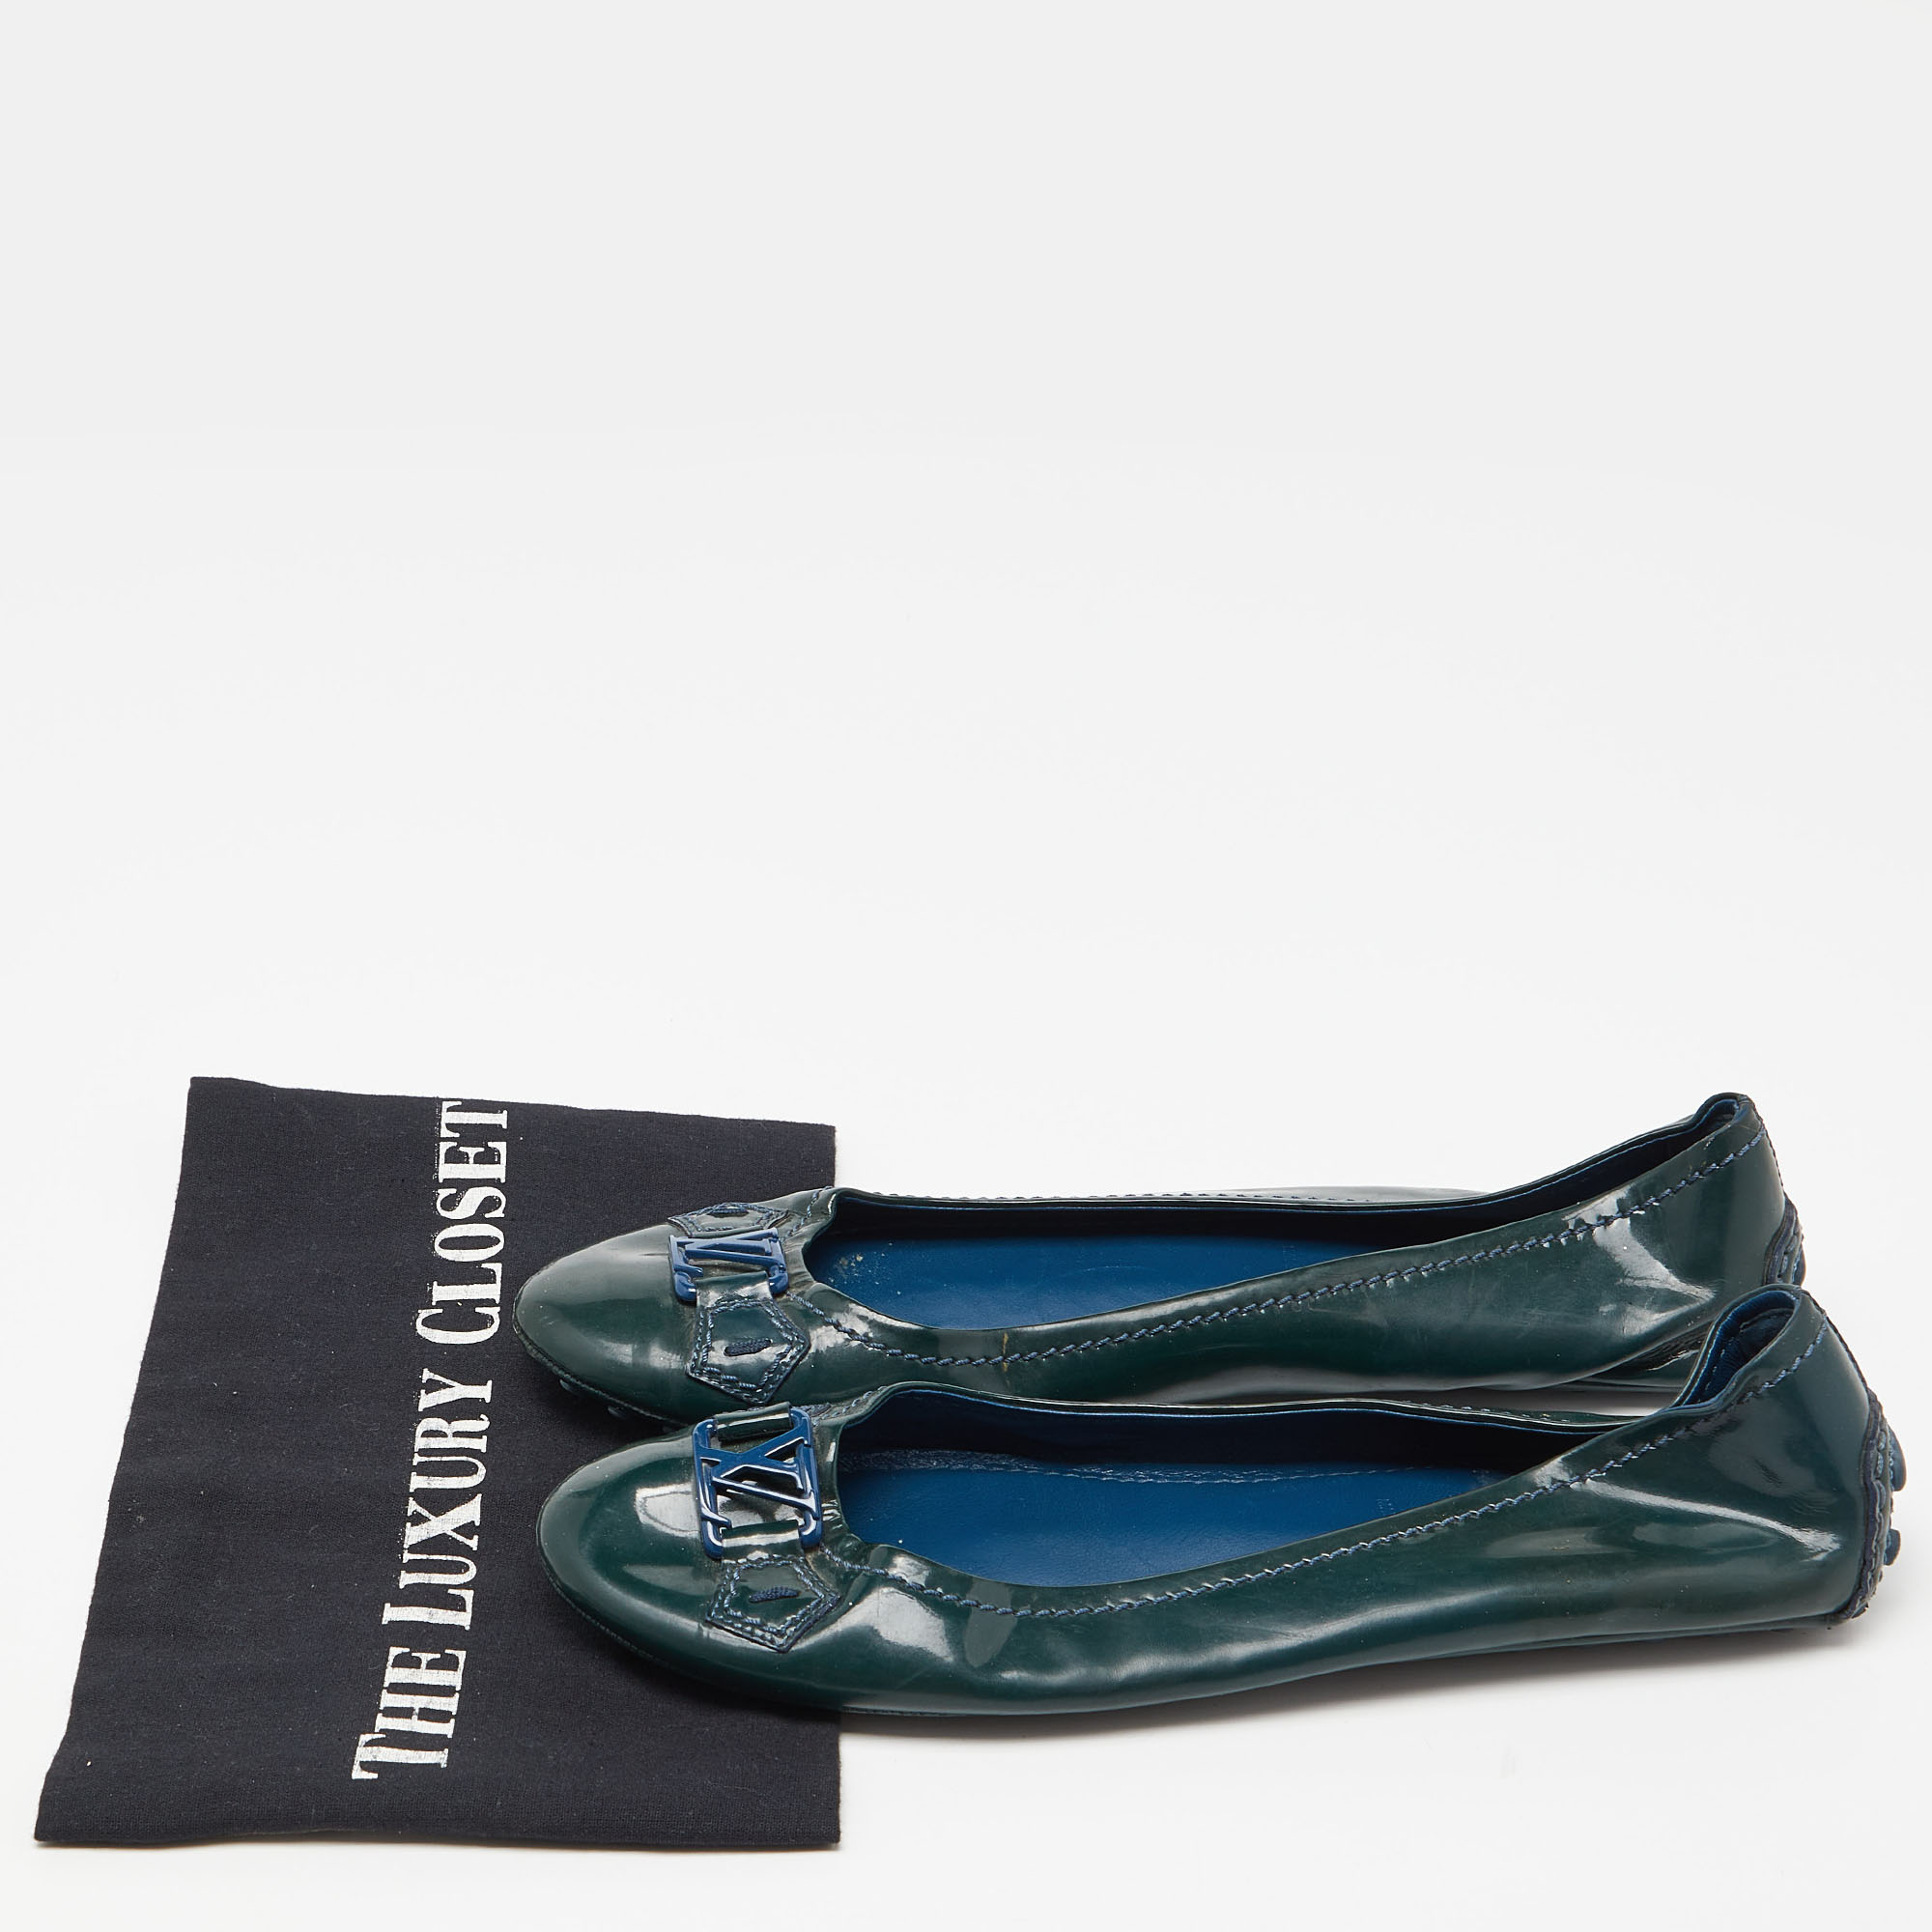 Louis Vuitton Dark Green Patent Leather Oxford Ballet Flats Size 39.5